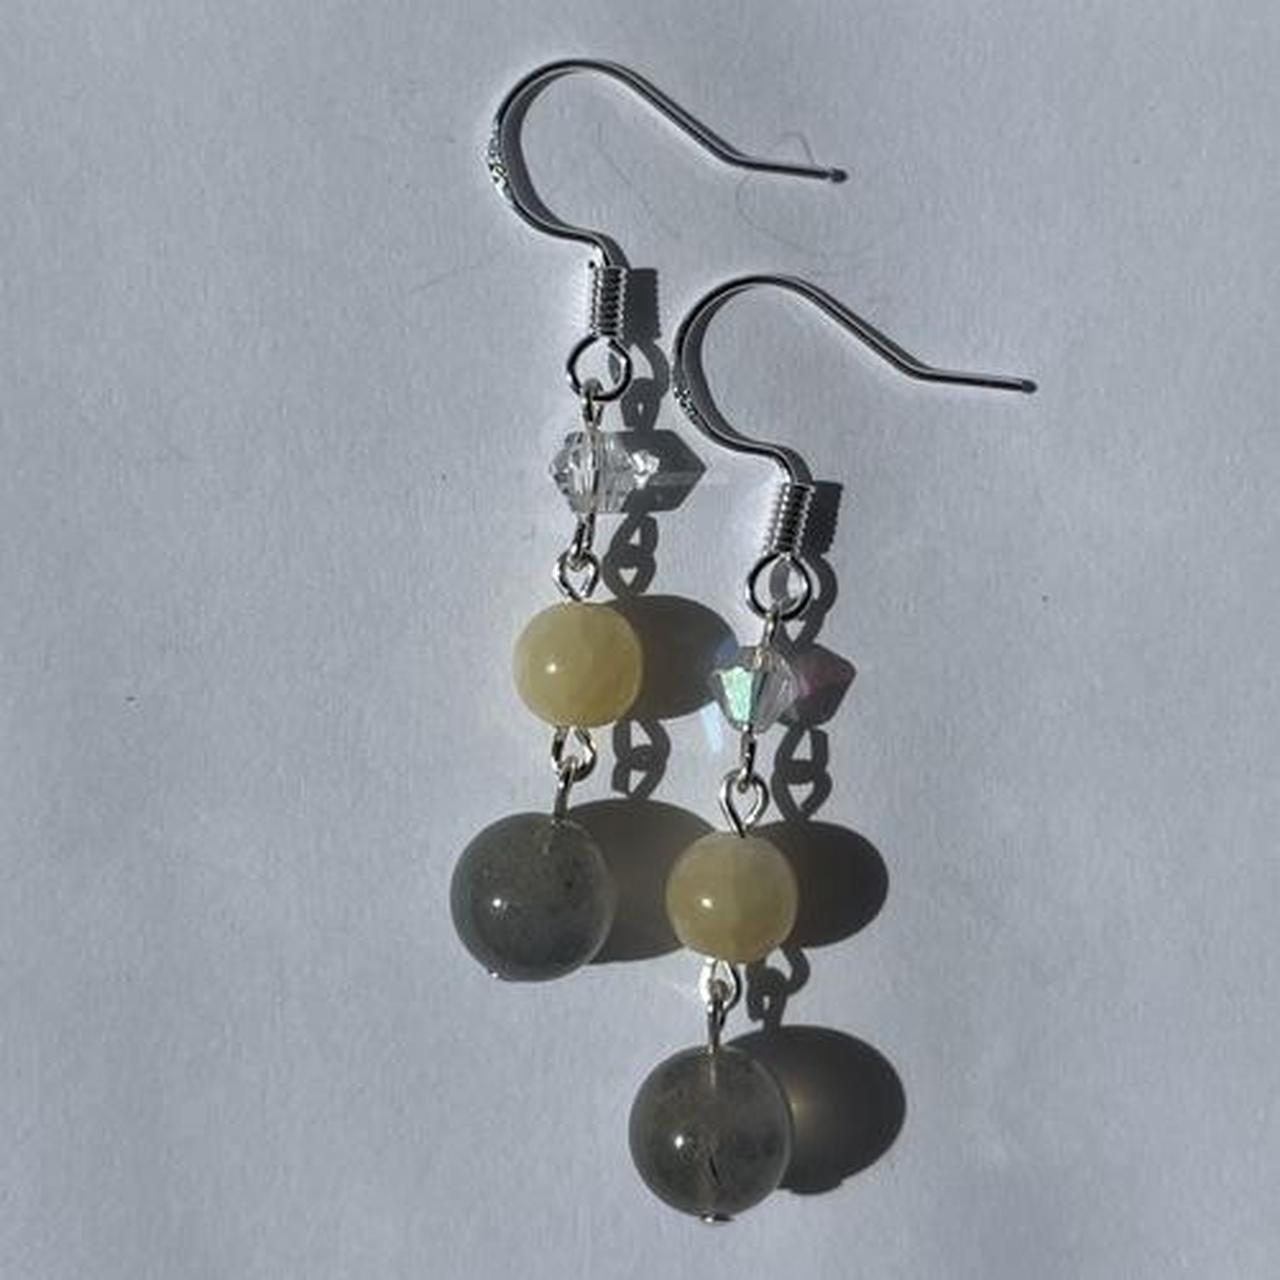 Product Image 1 - Handmade silver wire earrings!

🌟 Handmade